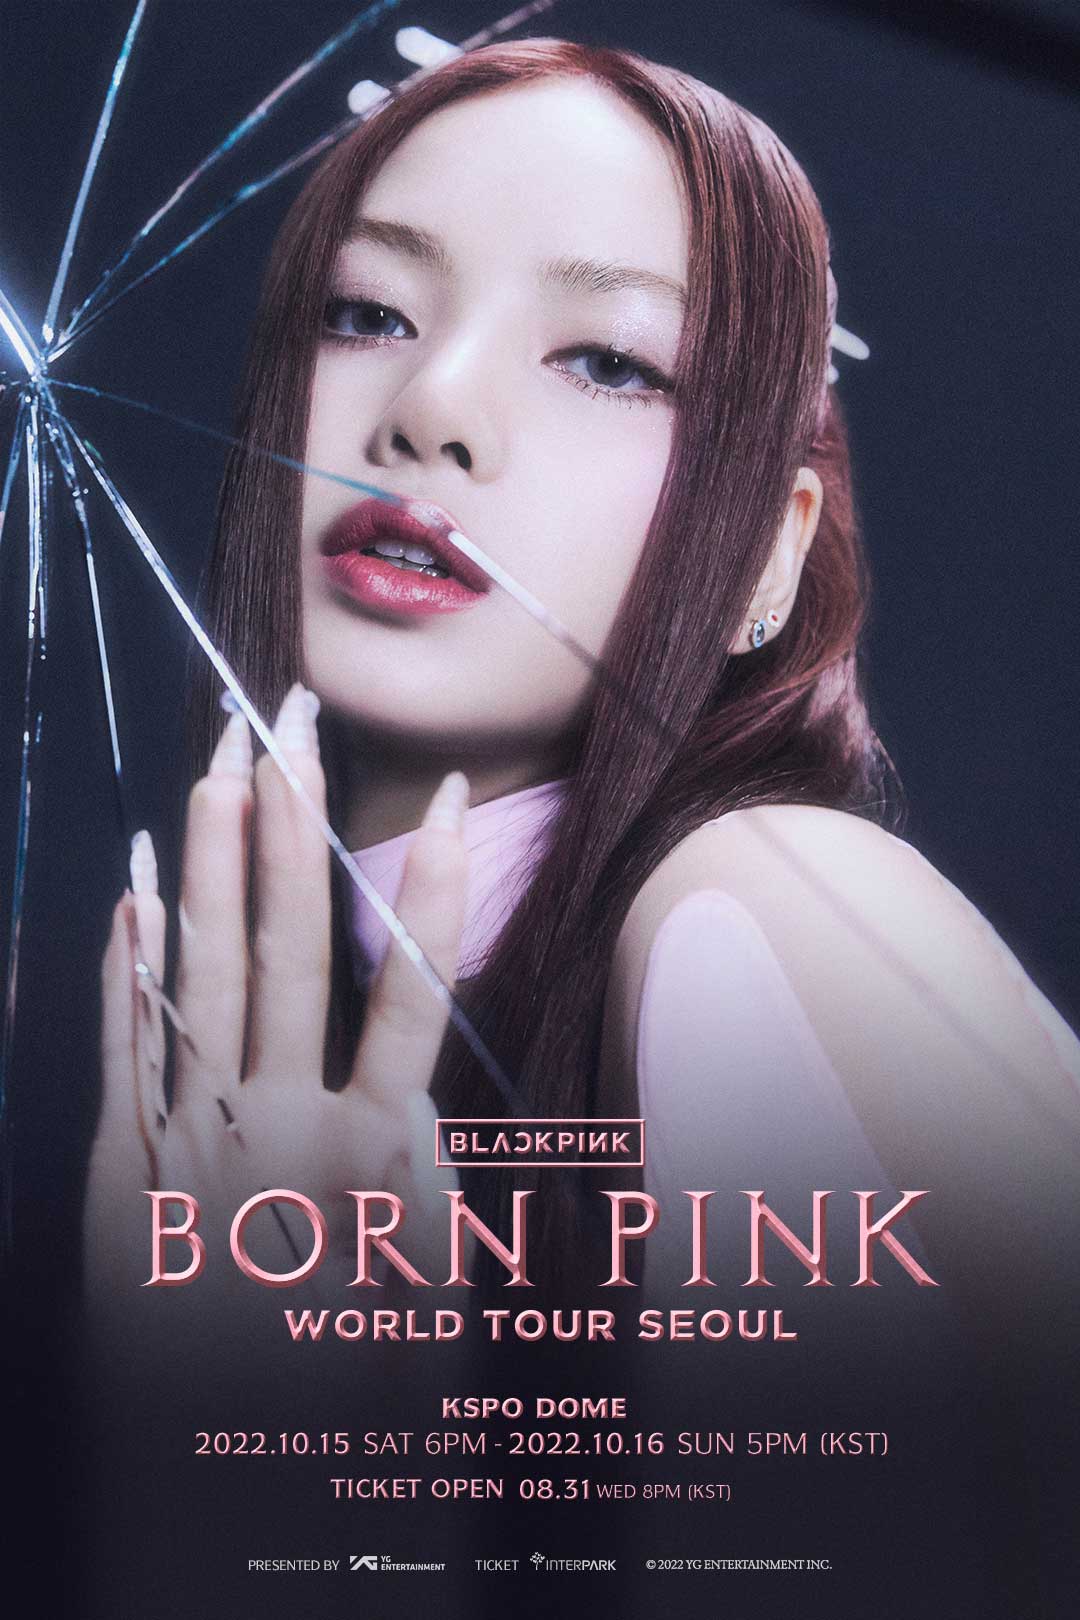 World tour born pink seoul lisa v02.jpg